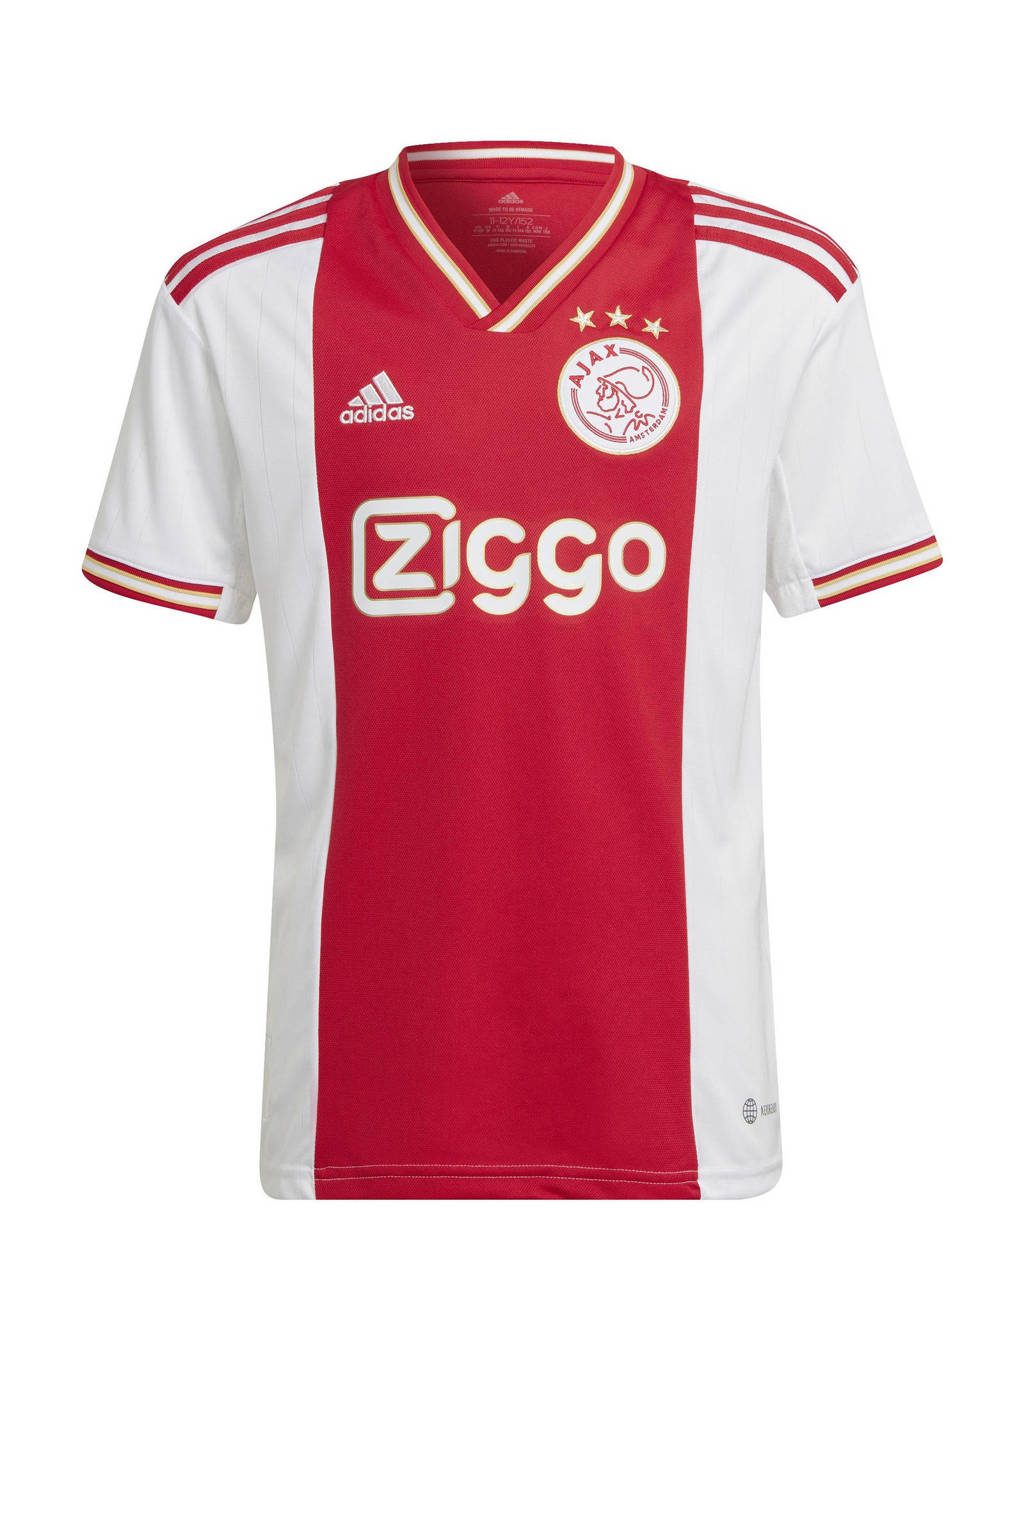 adidas Performance Junior Ajax Amsterdam voetbalshirt thuis